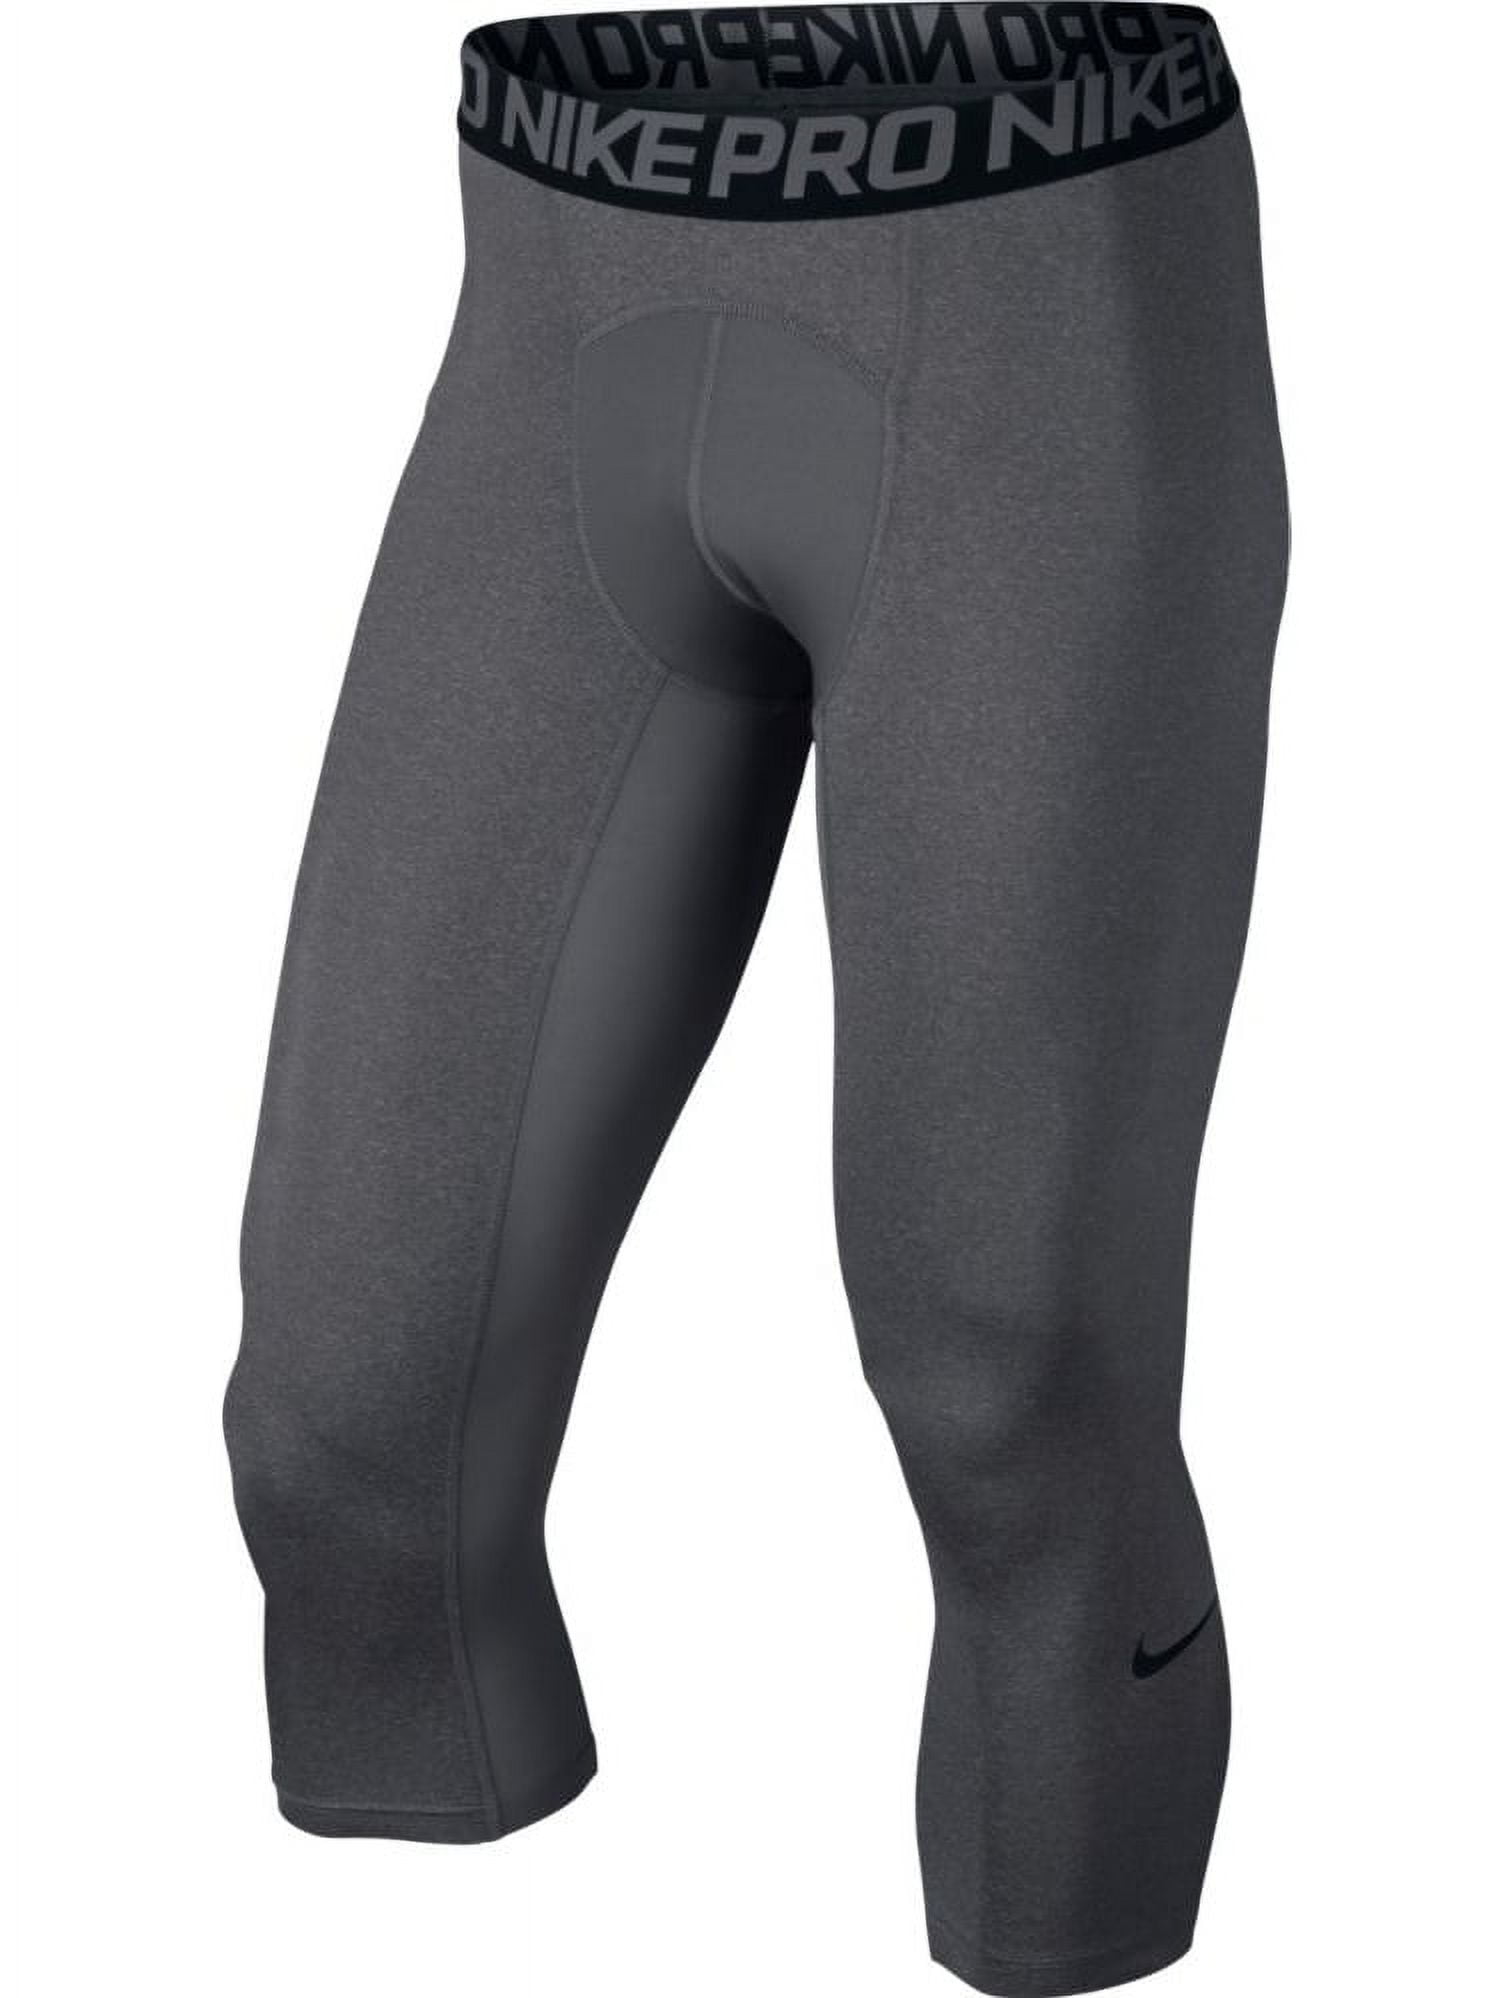 Nike pro cool men's compression training tights 703098-010 Black long pants